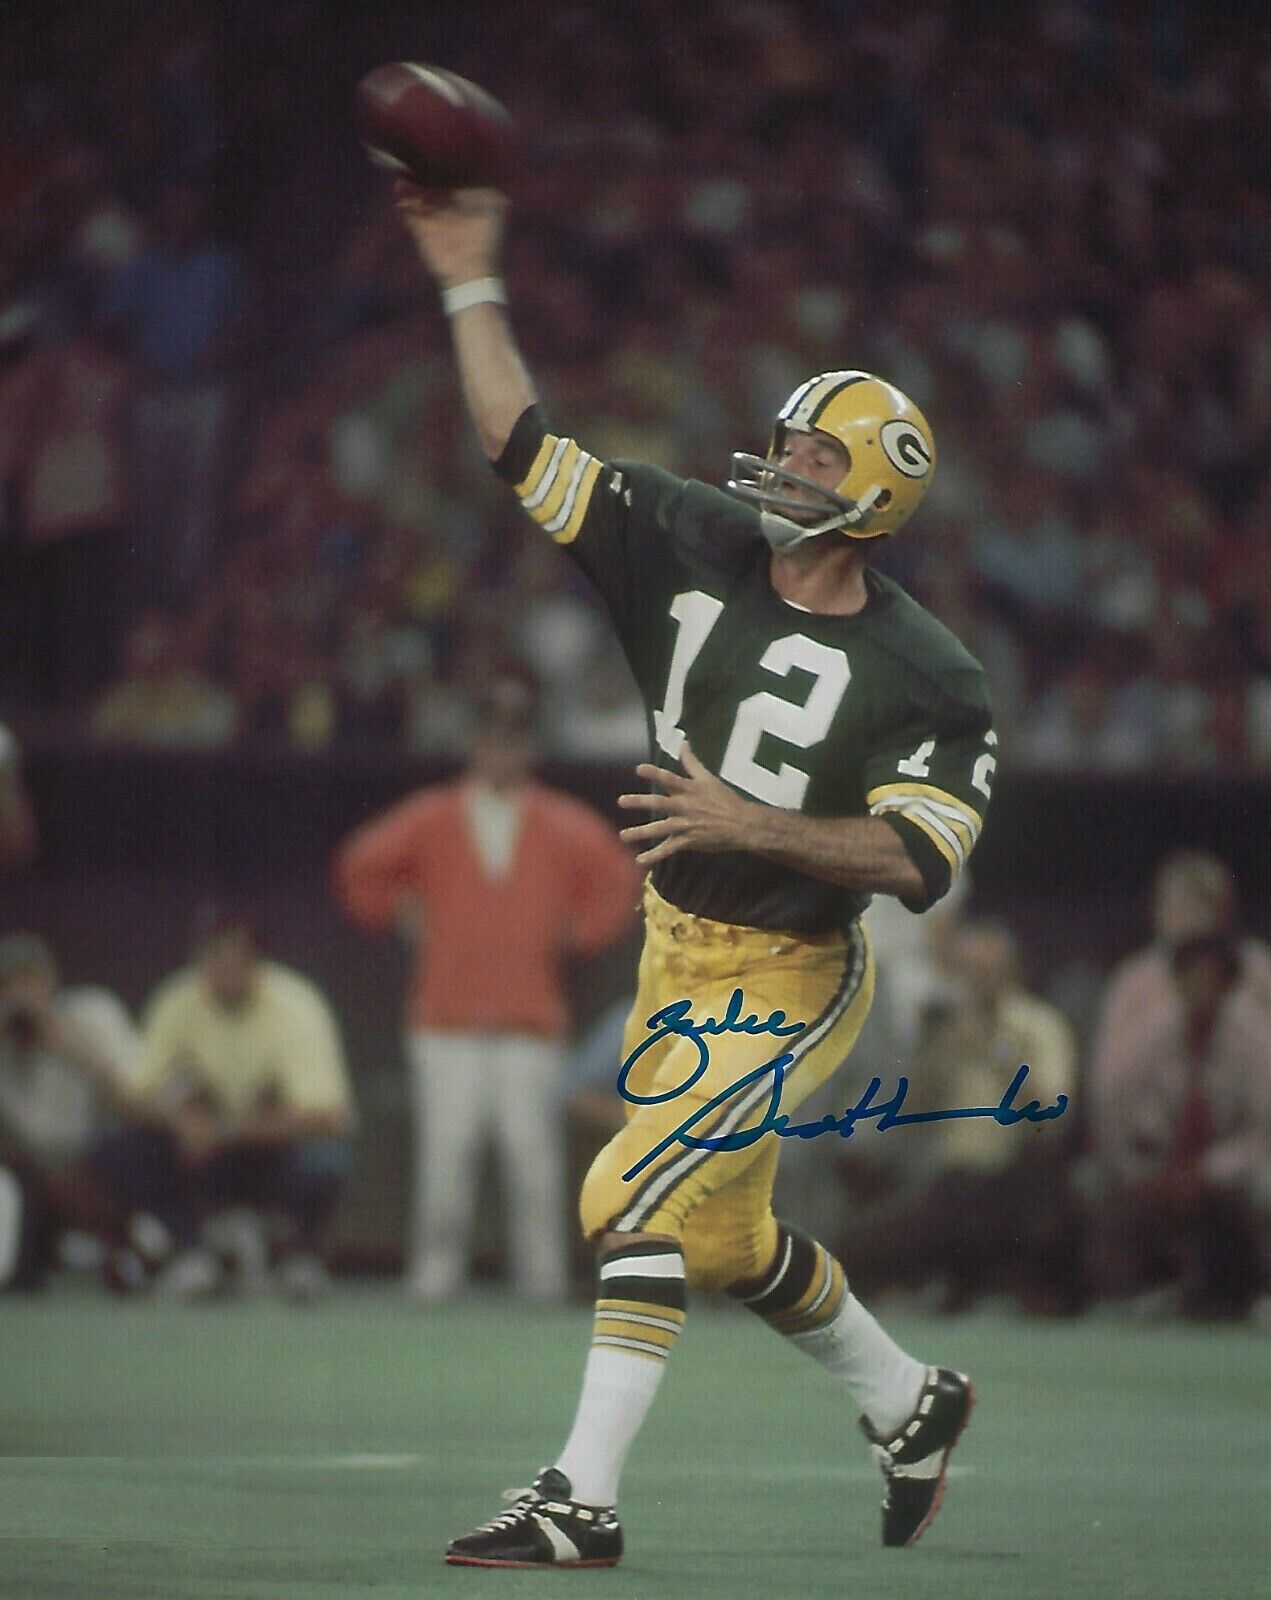 Zeke Bratkowski Autographed Signed 8x10 Photo Poster painting ( Packers ) REPRINT